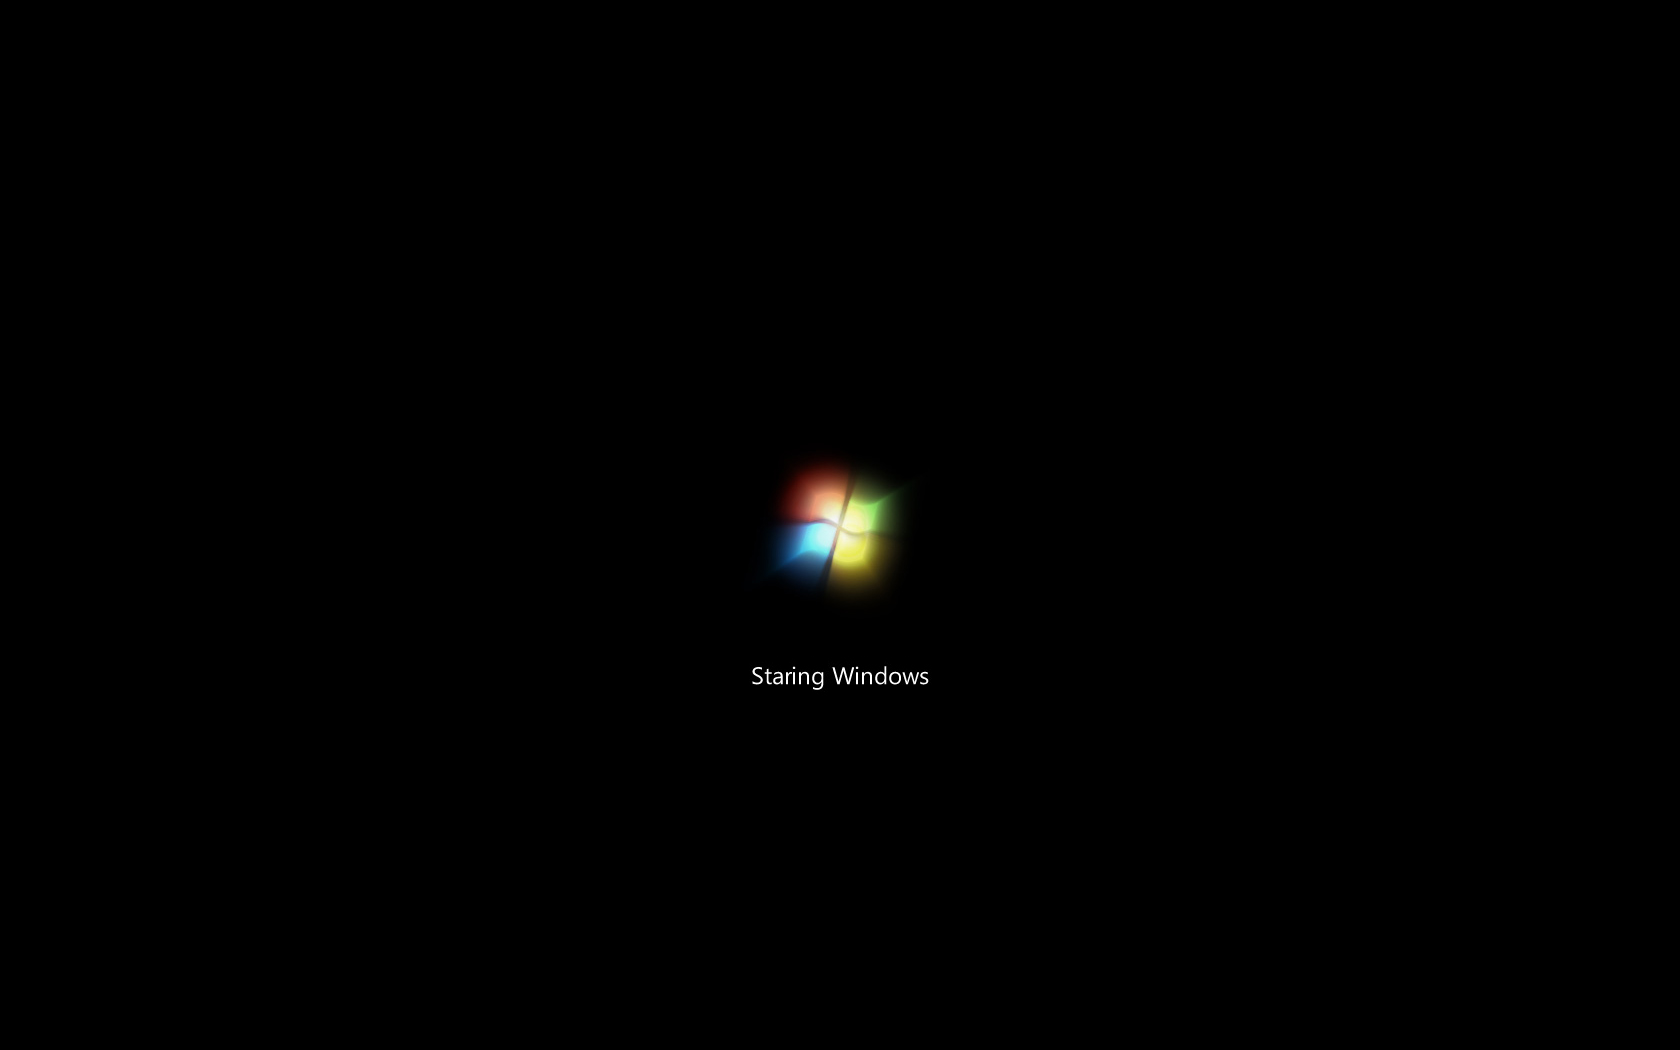 General 1680x1050 Windows Vista logo minimalism simple background black background Microsoft Windows operating system